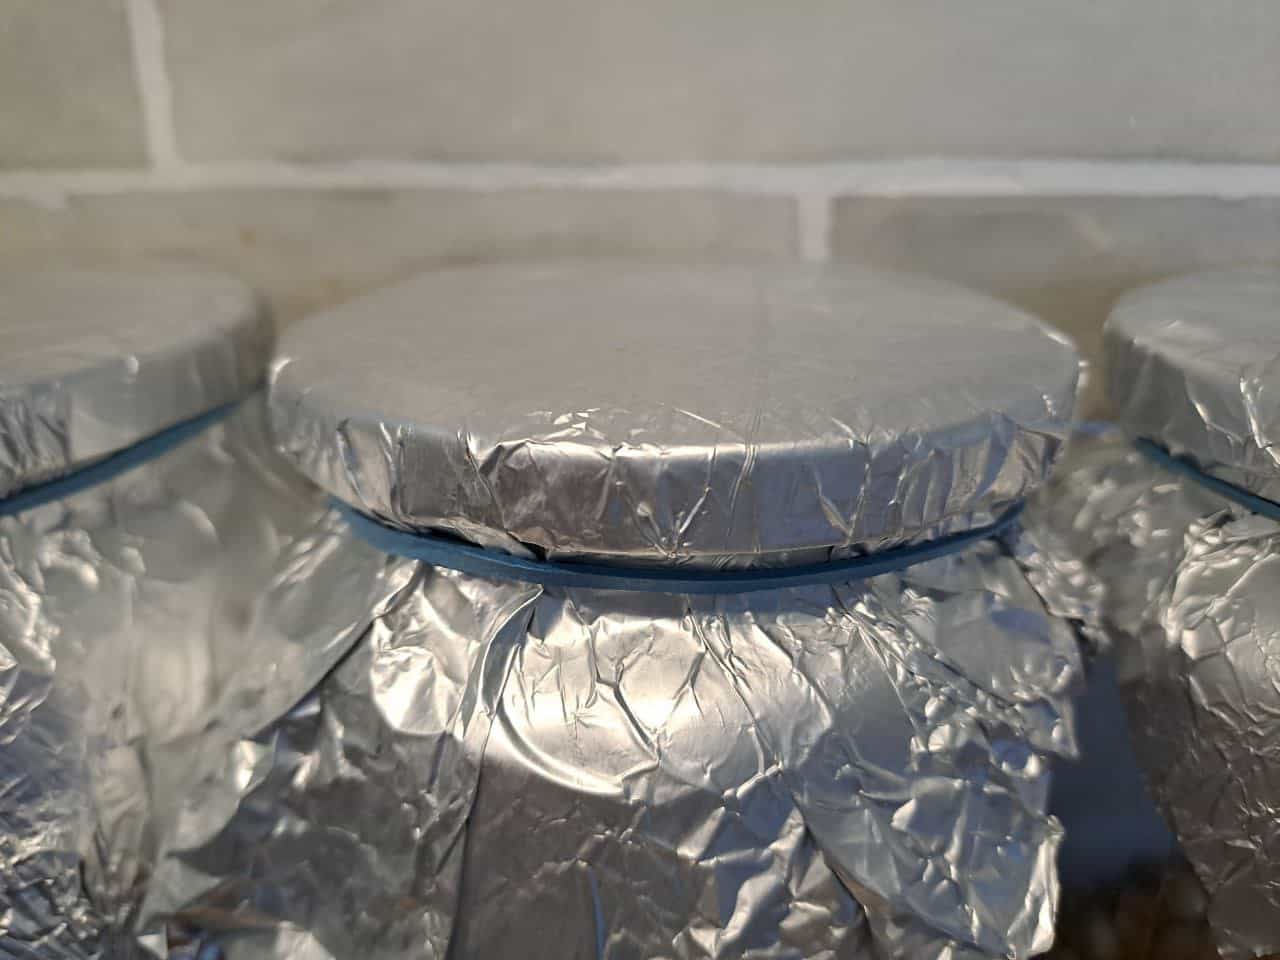 Tin foil wrapped around grain jar for mushroom spawn